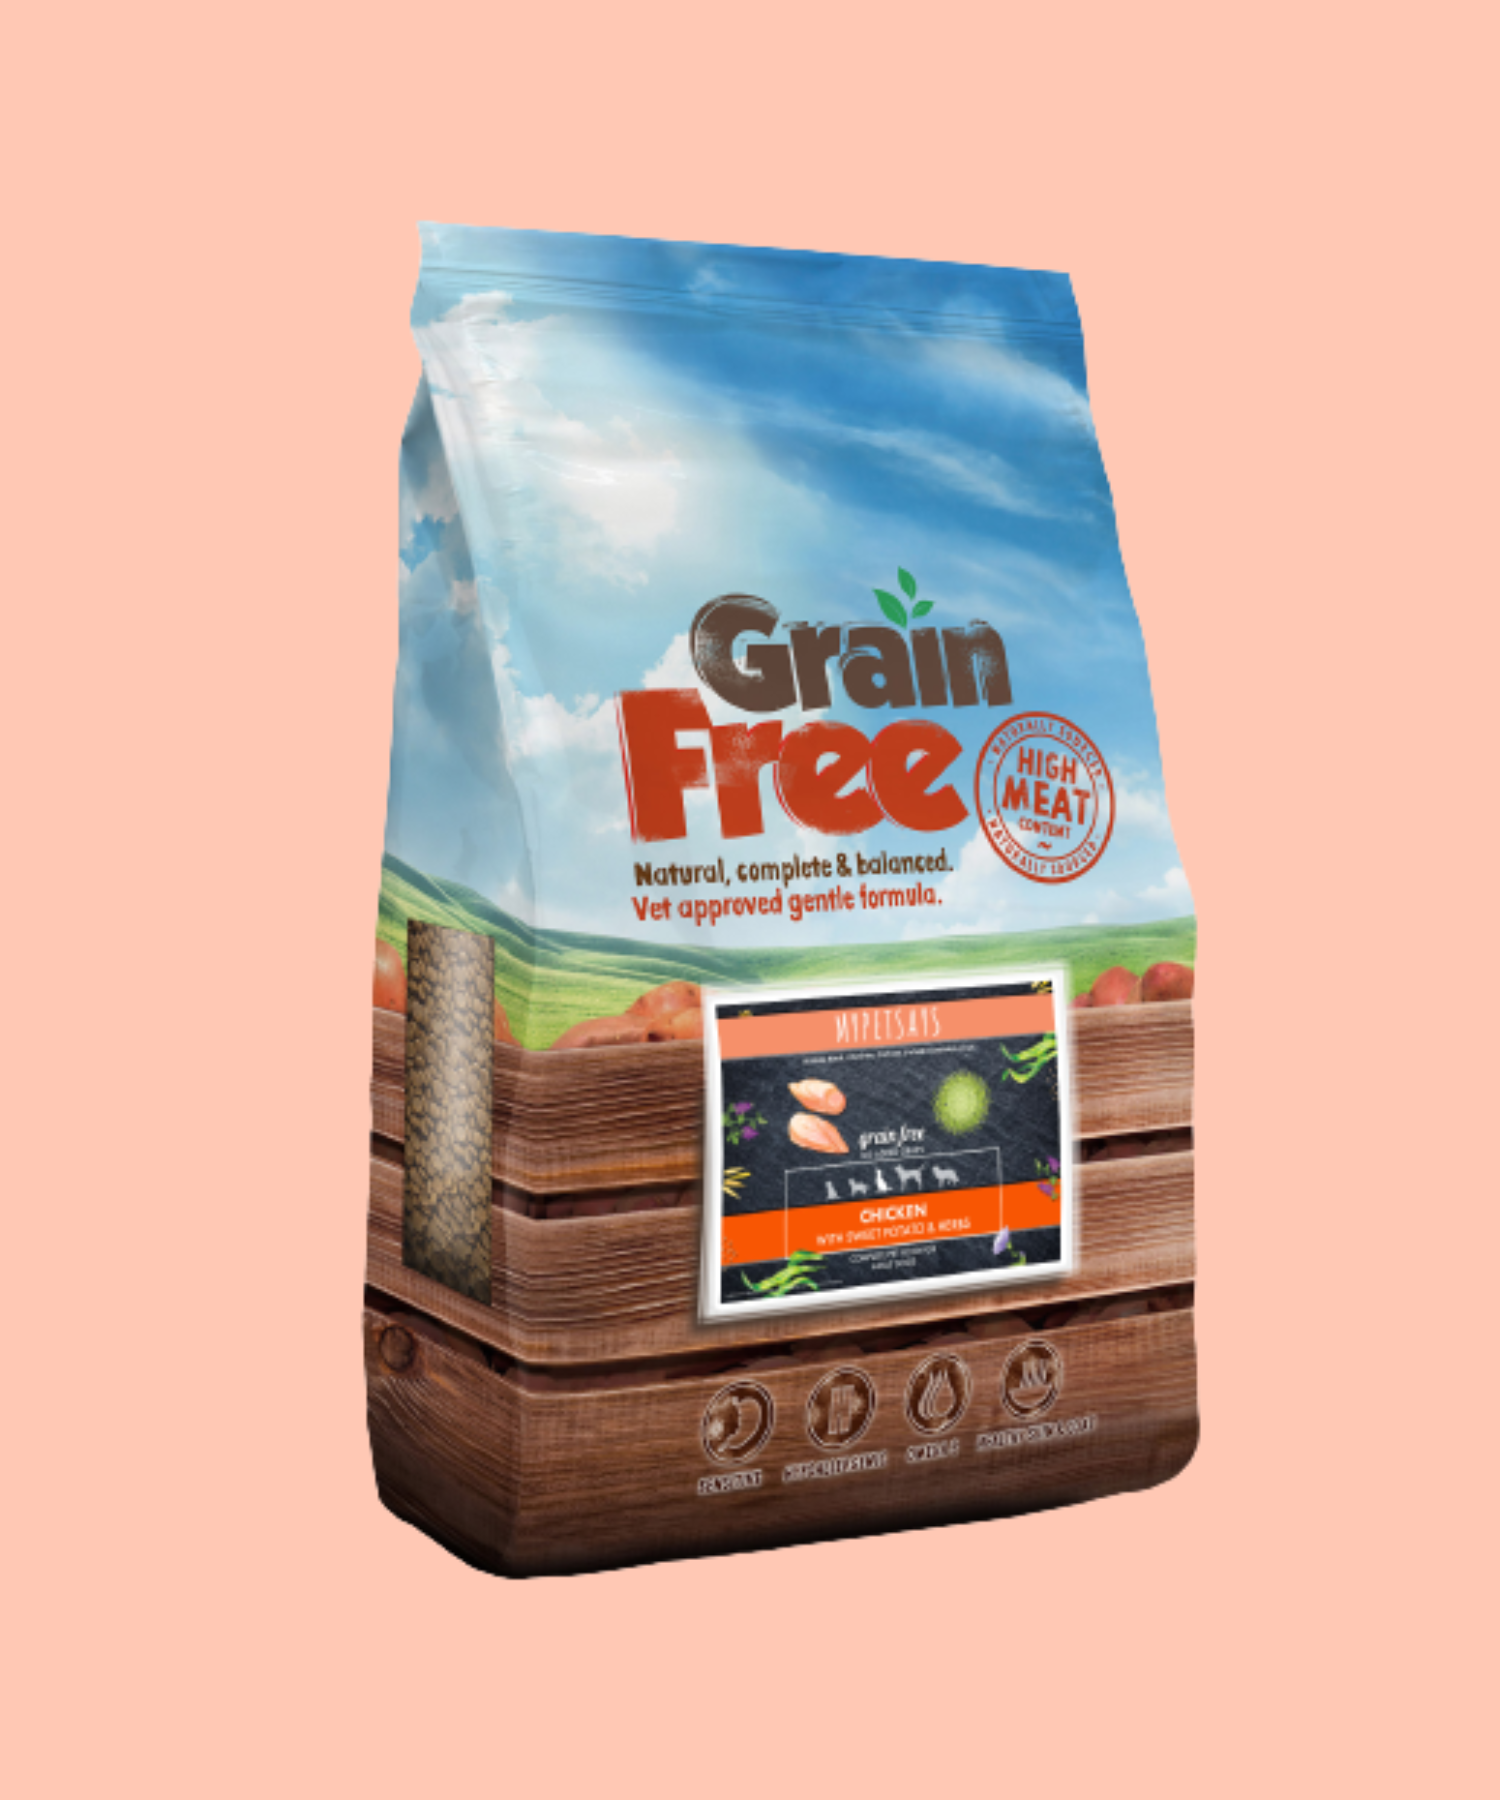 Grain free dog food